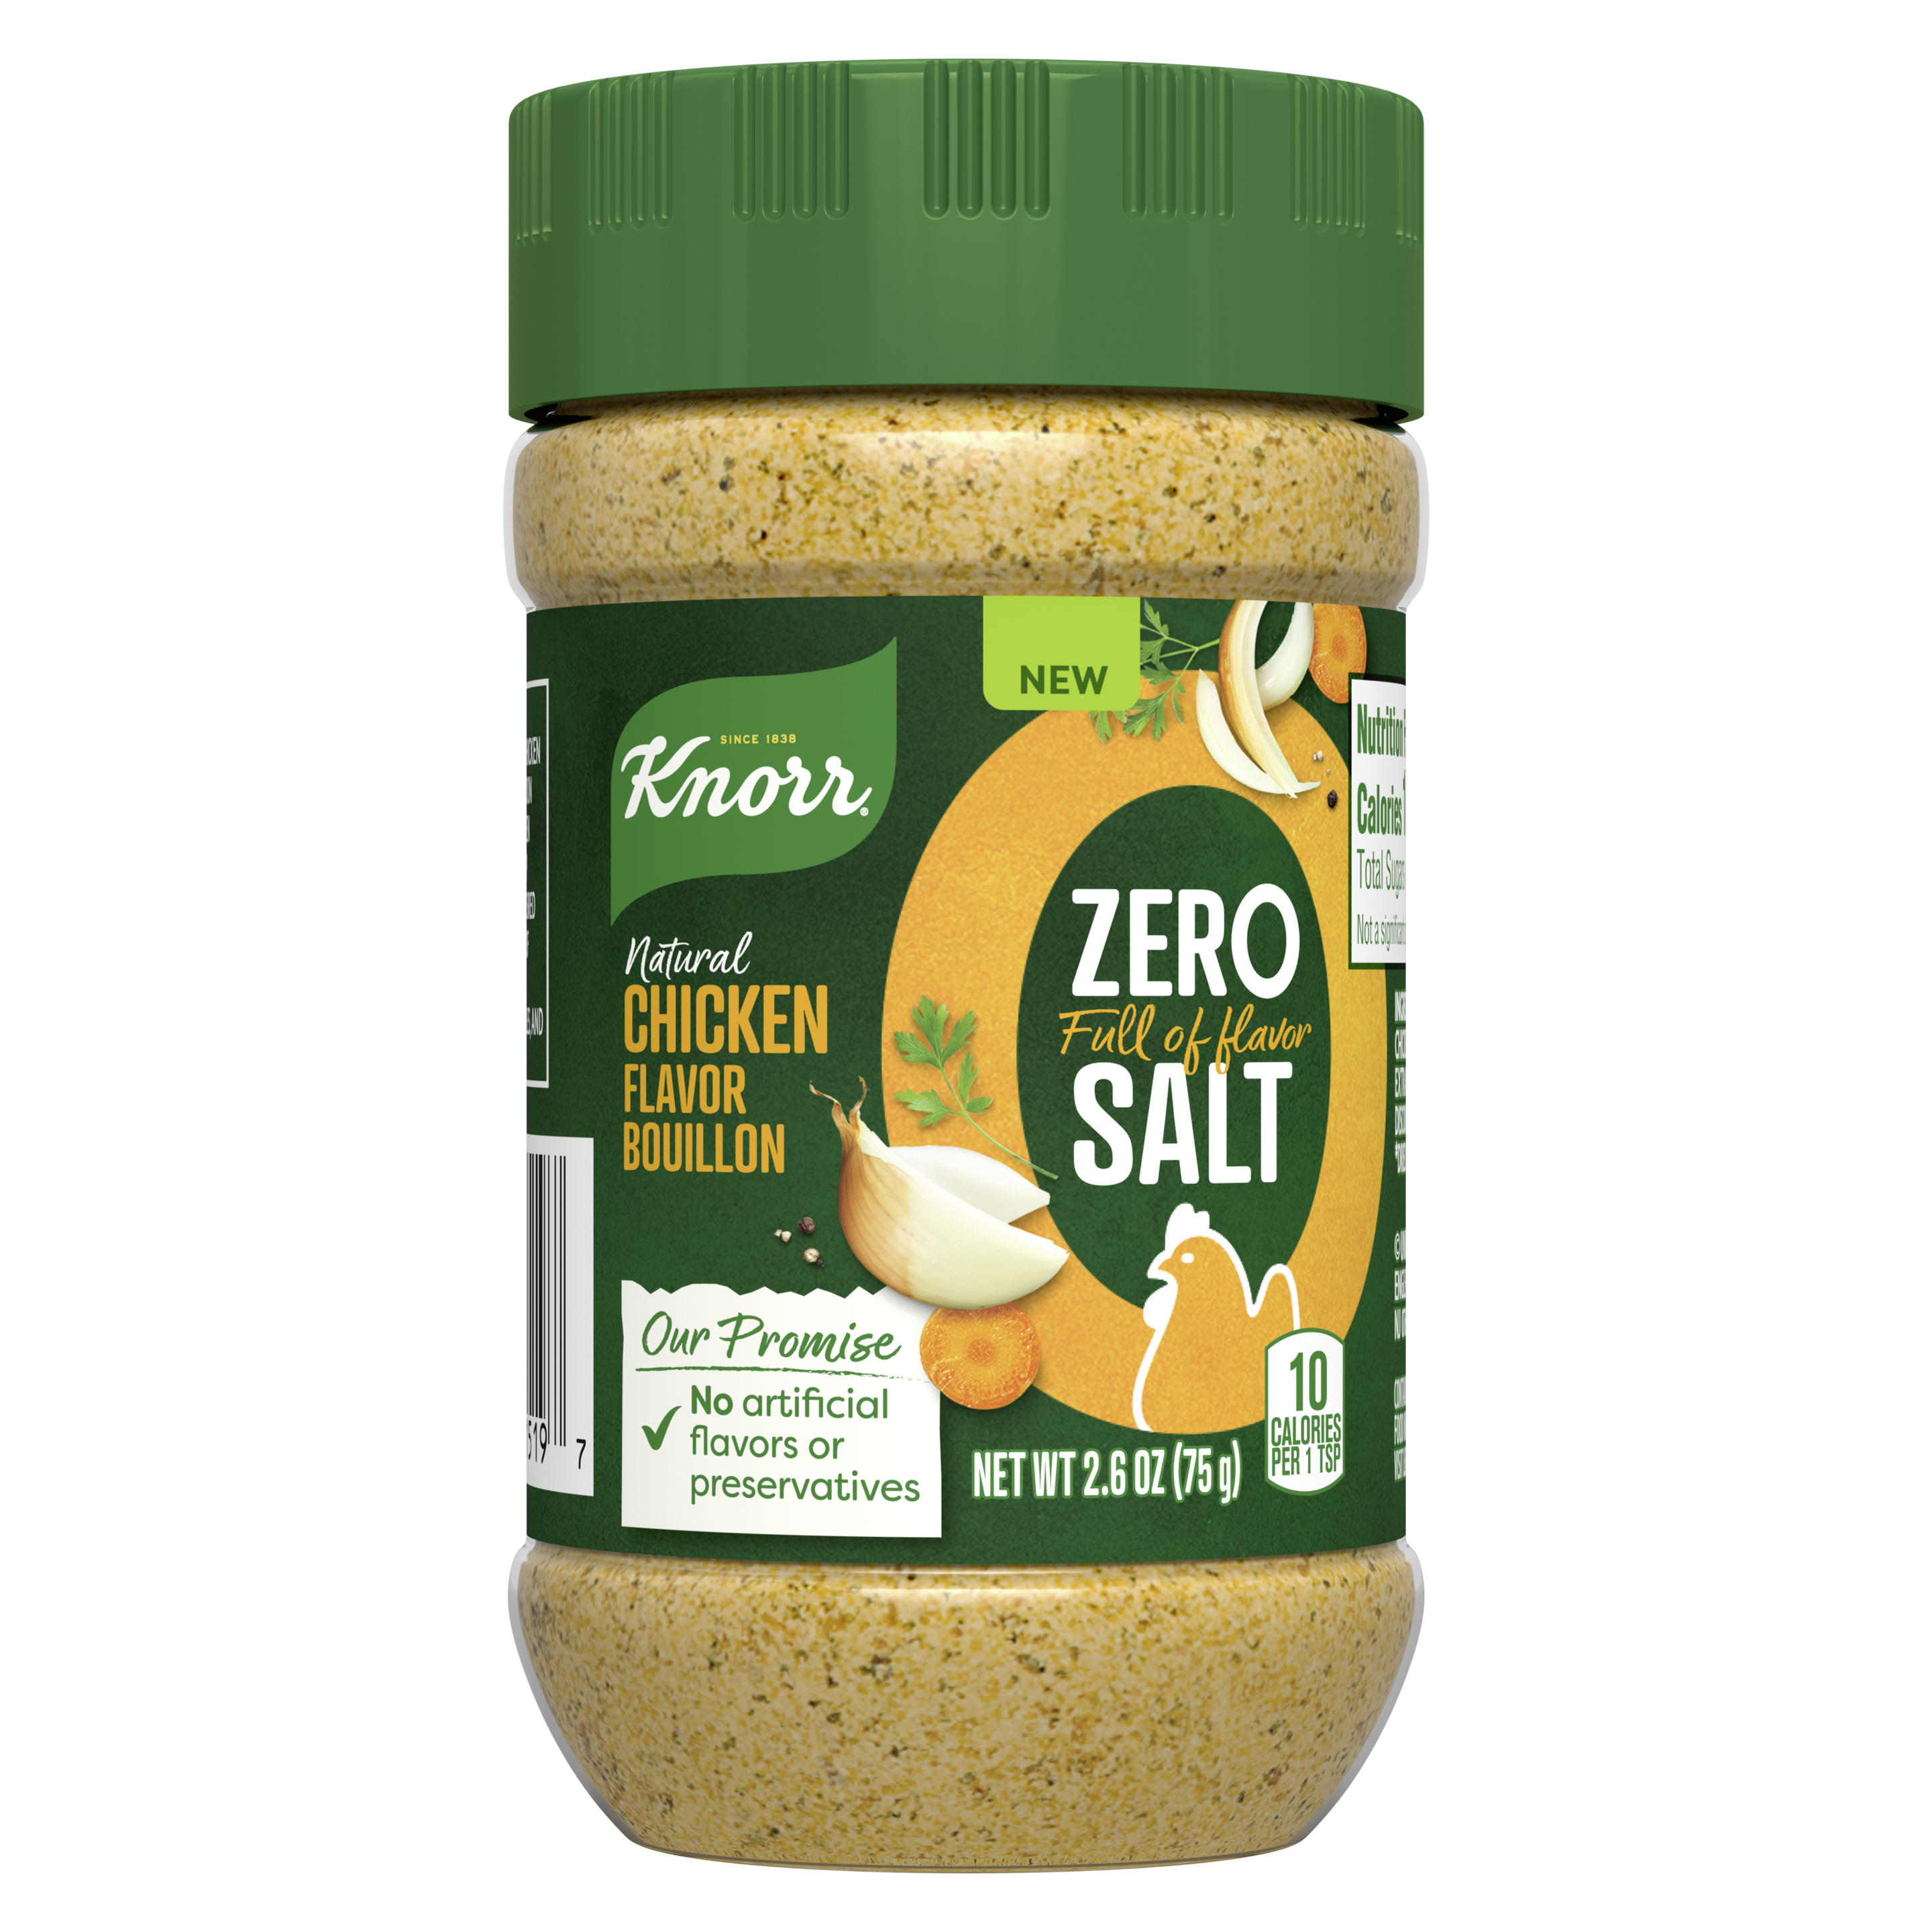 Knorr Zero Salt Chicken Bouillon Front of Pack